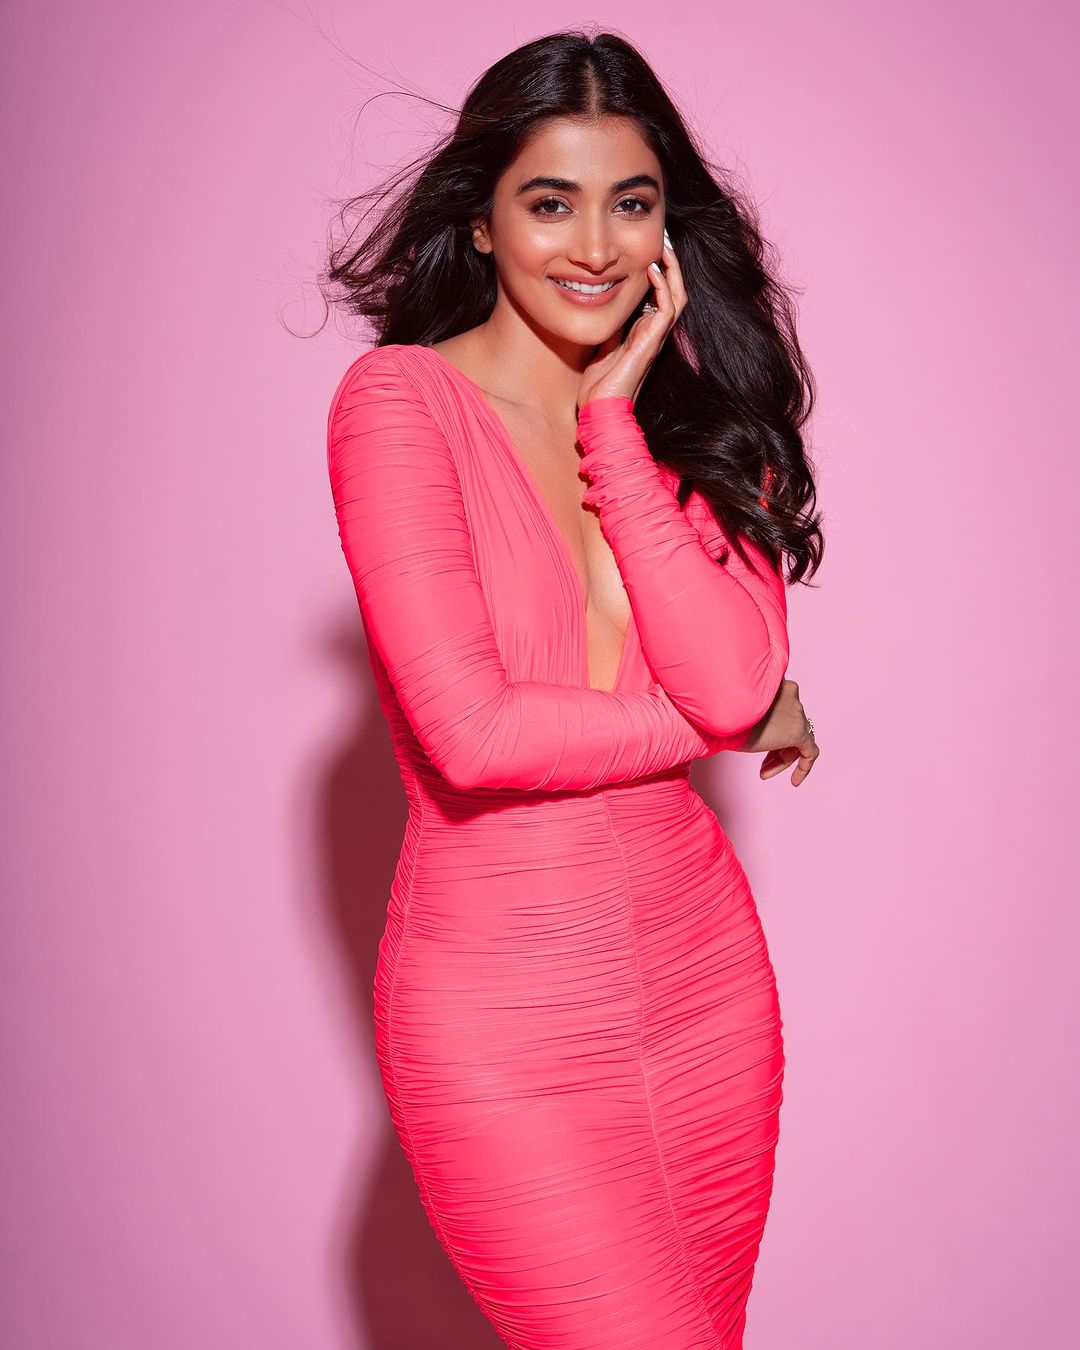 pooja-hegde-stunning-looks-in-amazing-barbie-bodycon-pink-dress